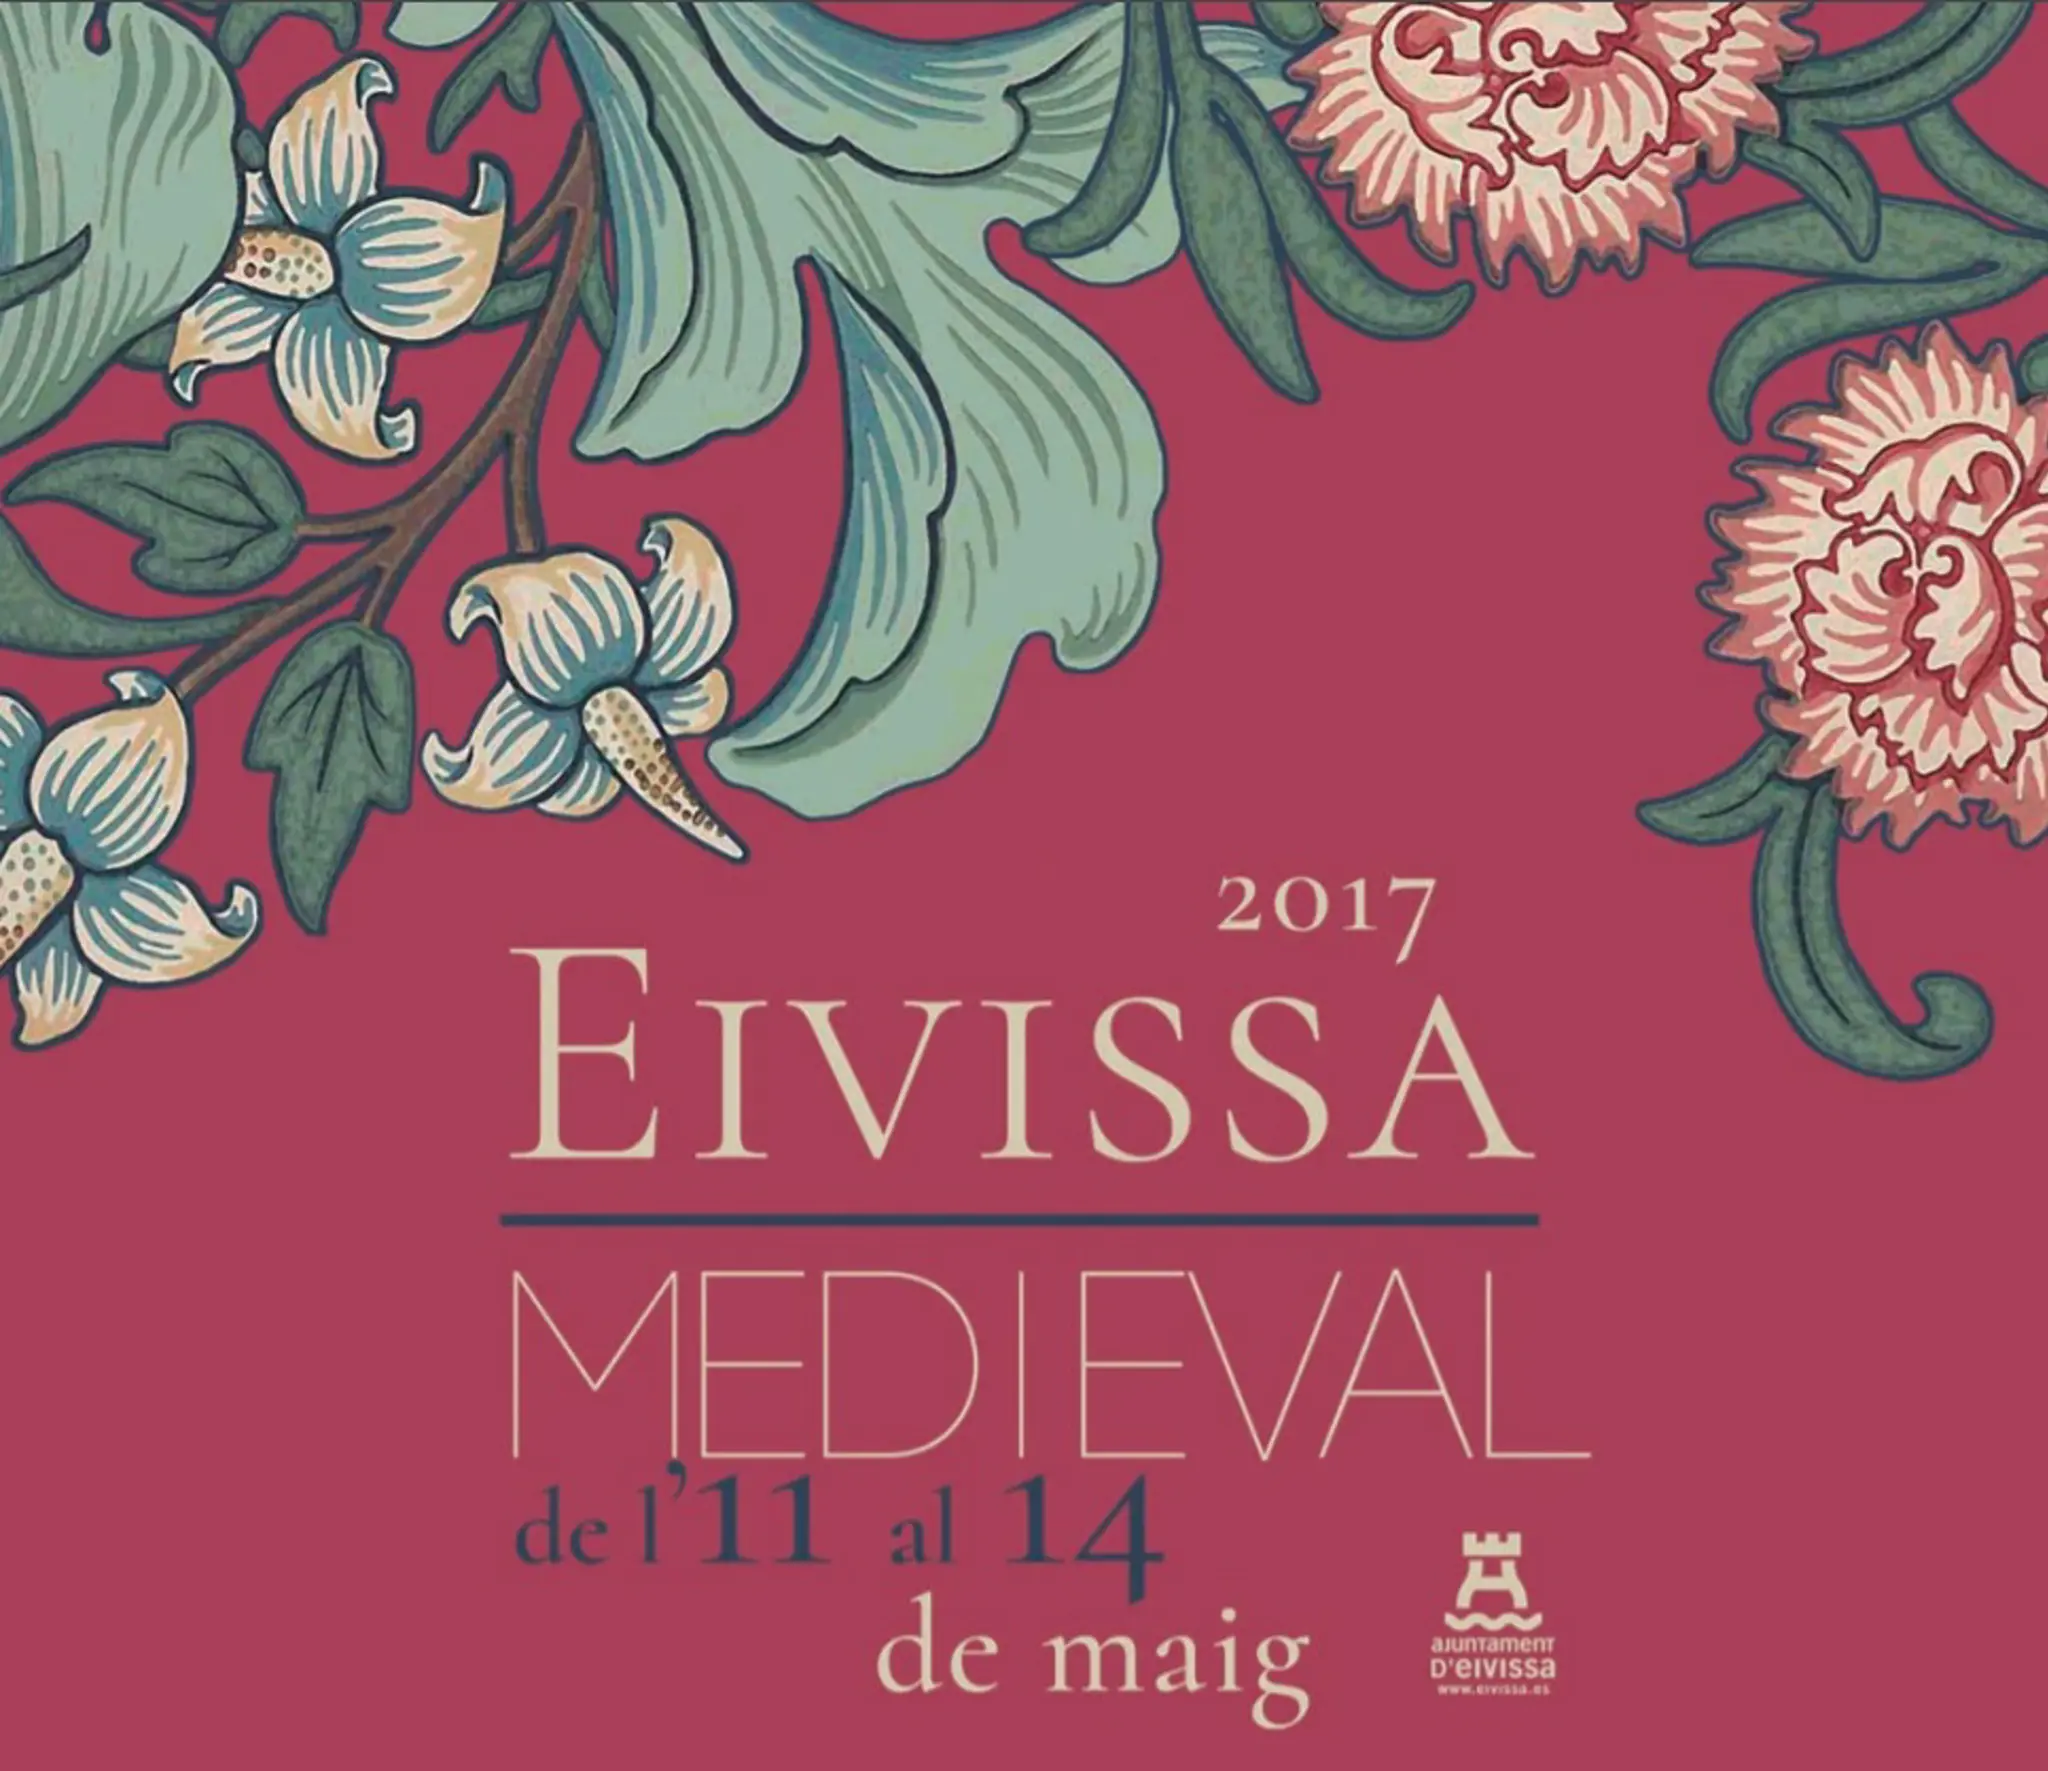 Medieval Festival Ibiza 2017